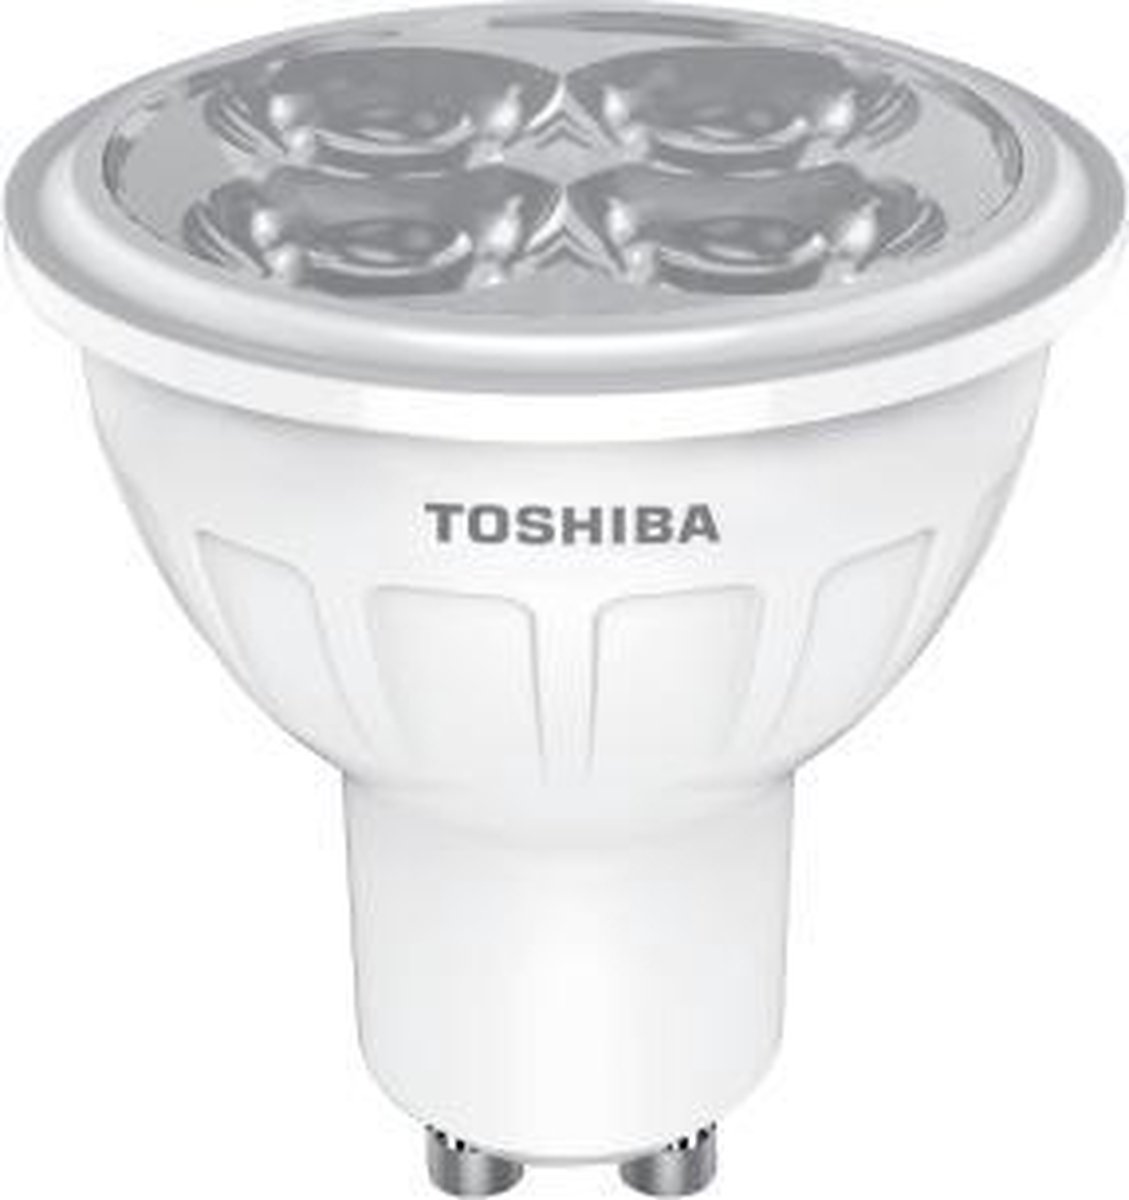 Toshiba 00601760506A LED-lamp 5 W GU10 A+ 3 stuks | bol.com